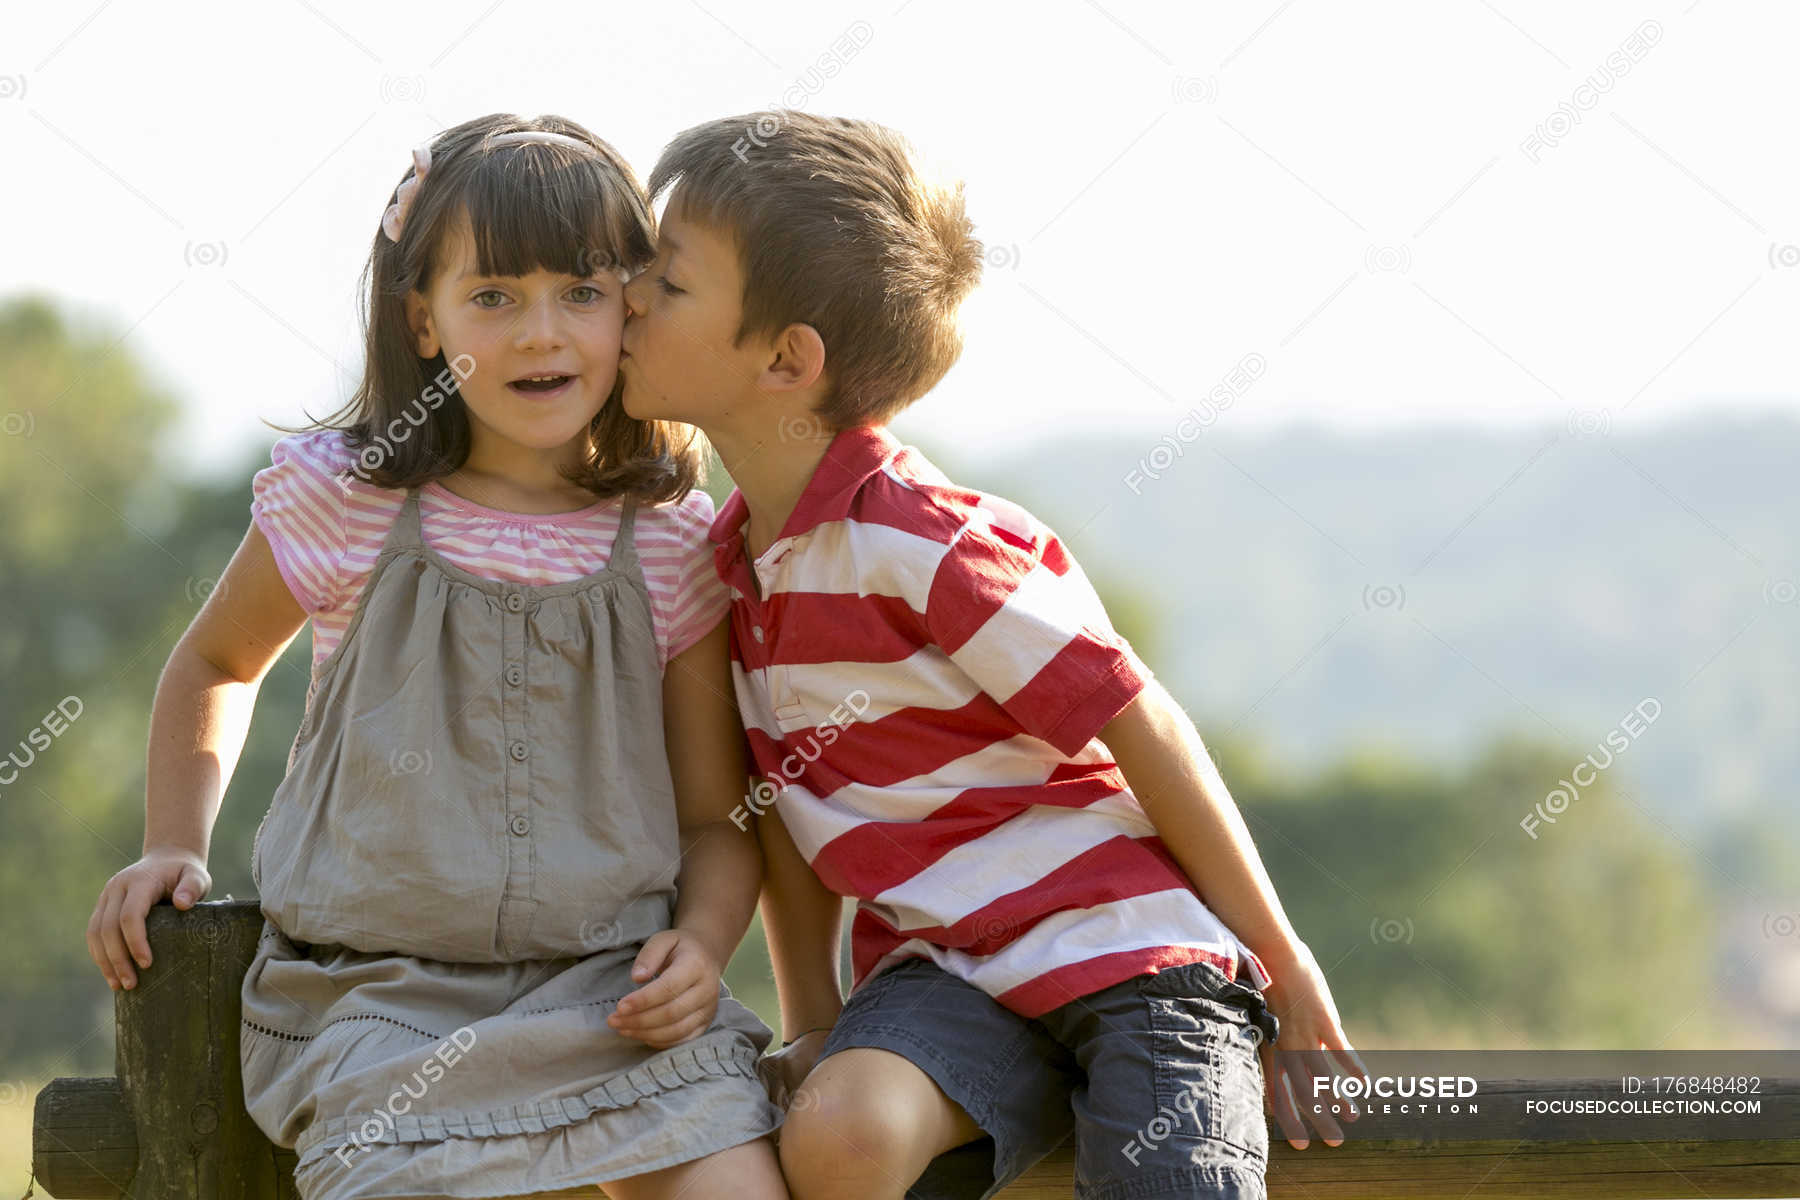 Boys kiss girls. Маленький мальчик целует девочку. Мальчик целует мальчика. Девочка сидит на лице мальчика. Сидя девочка целует мальчика.